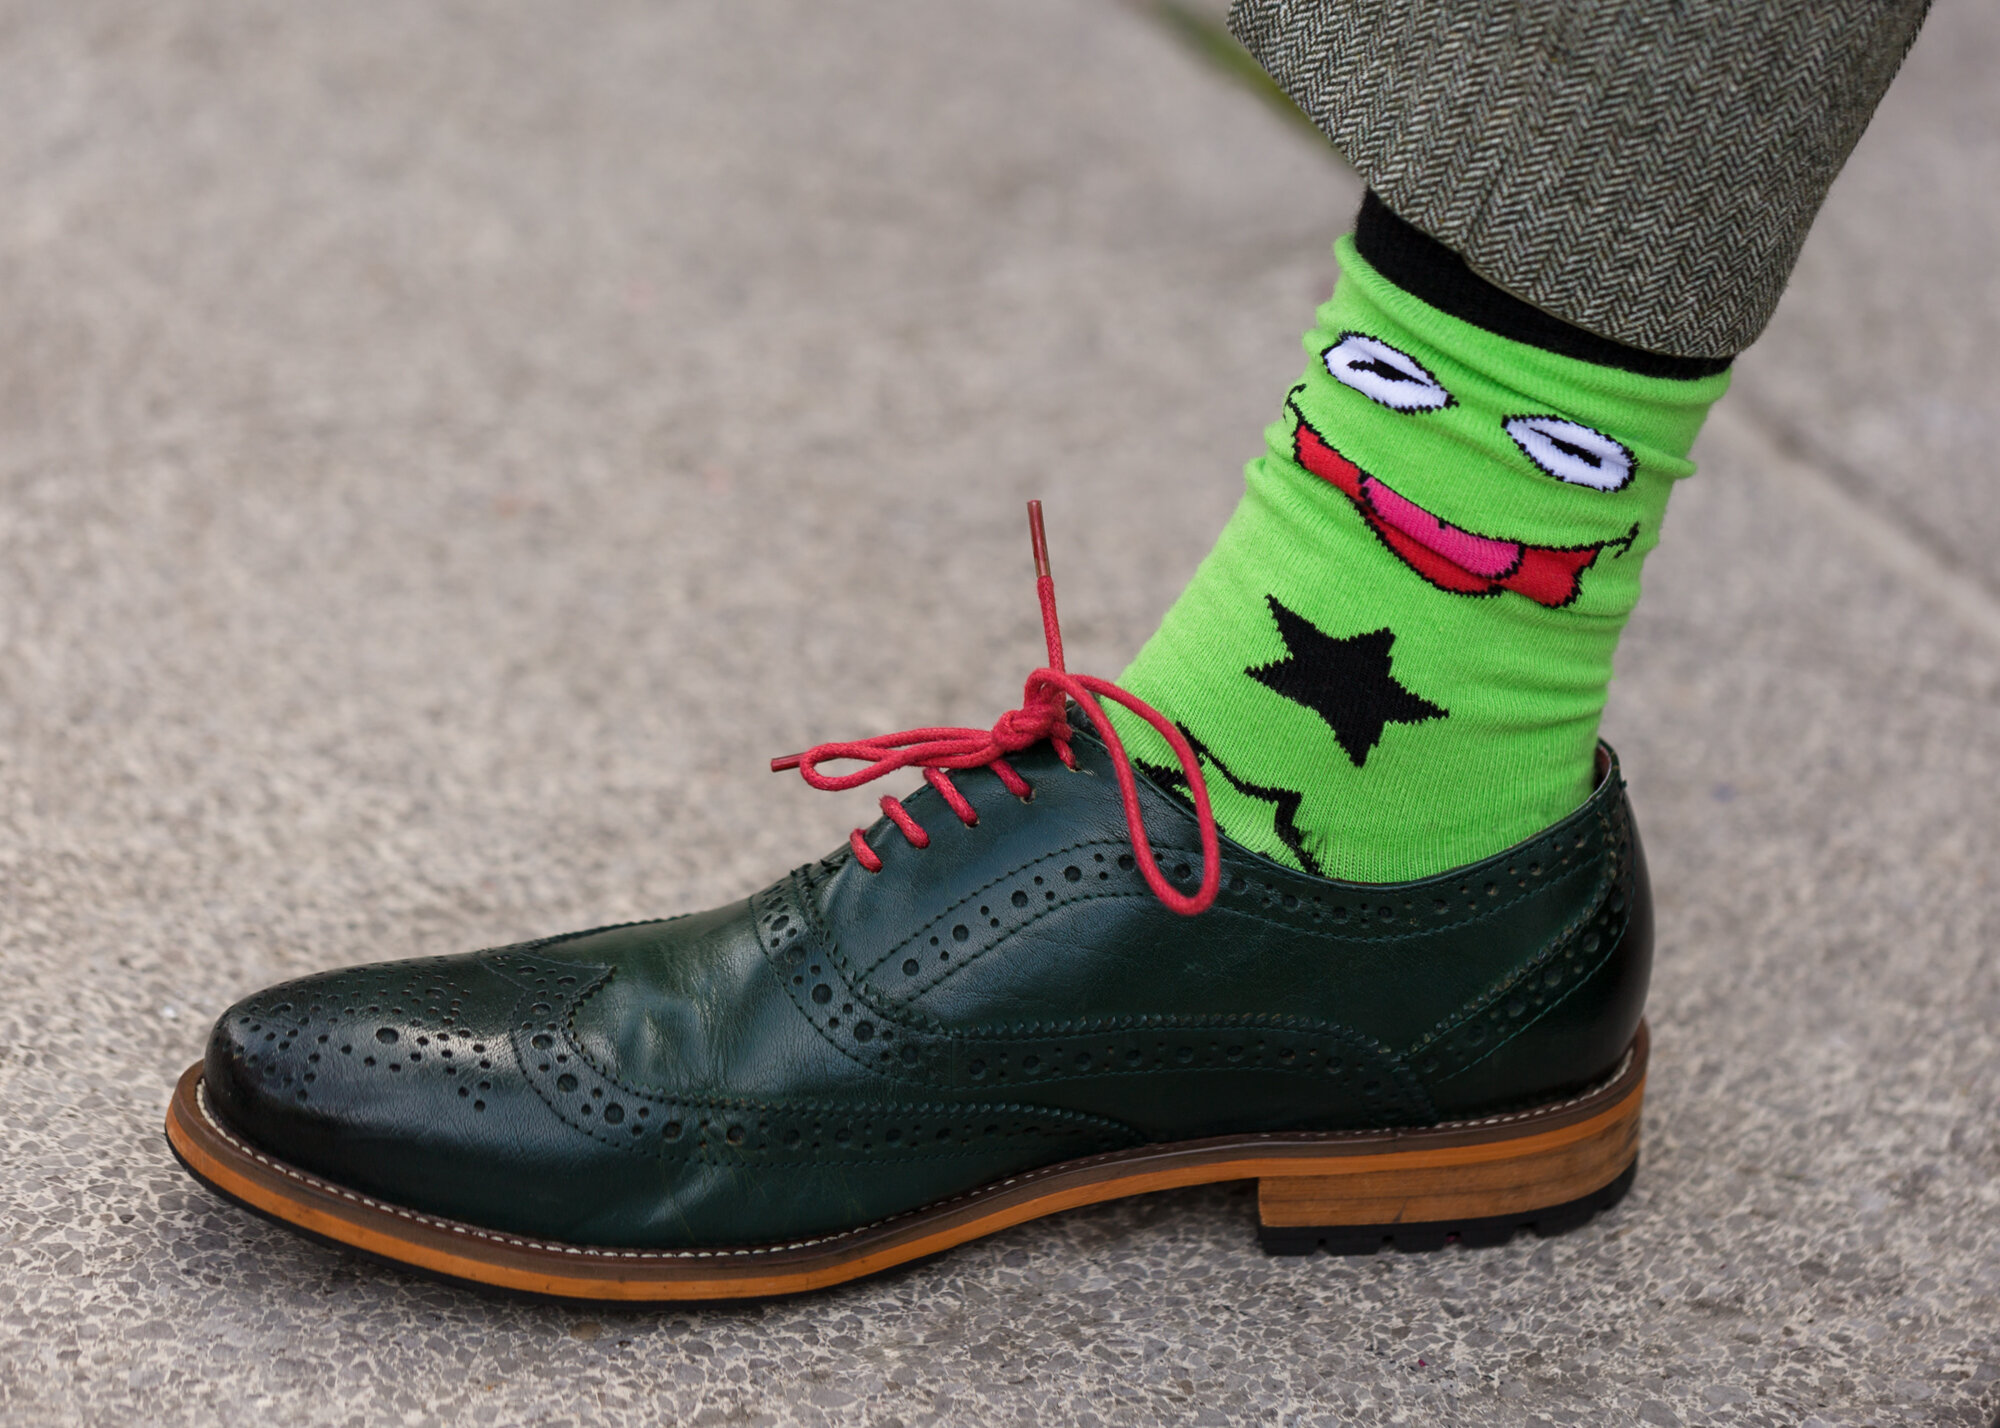 kermit the frog socks at a wedding